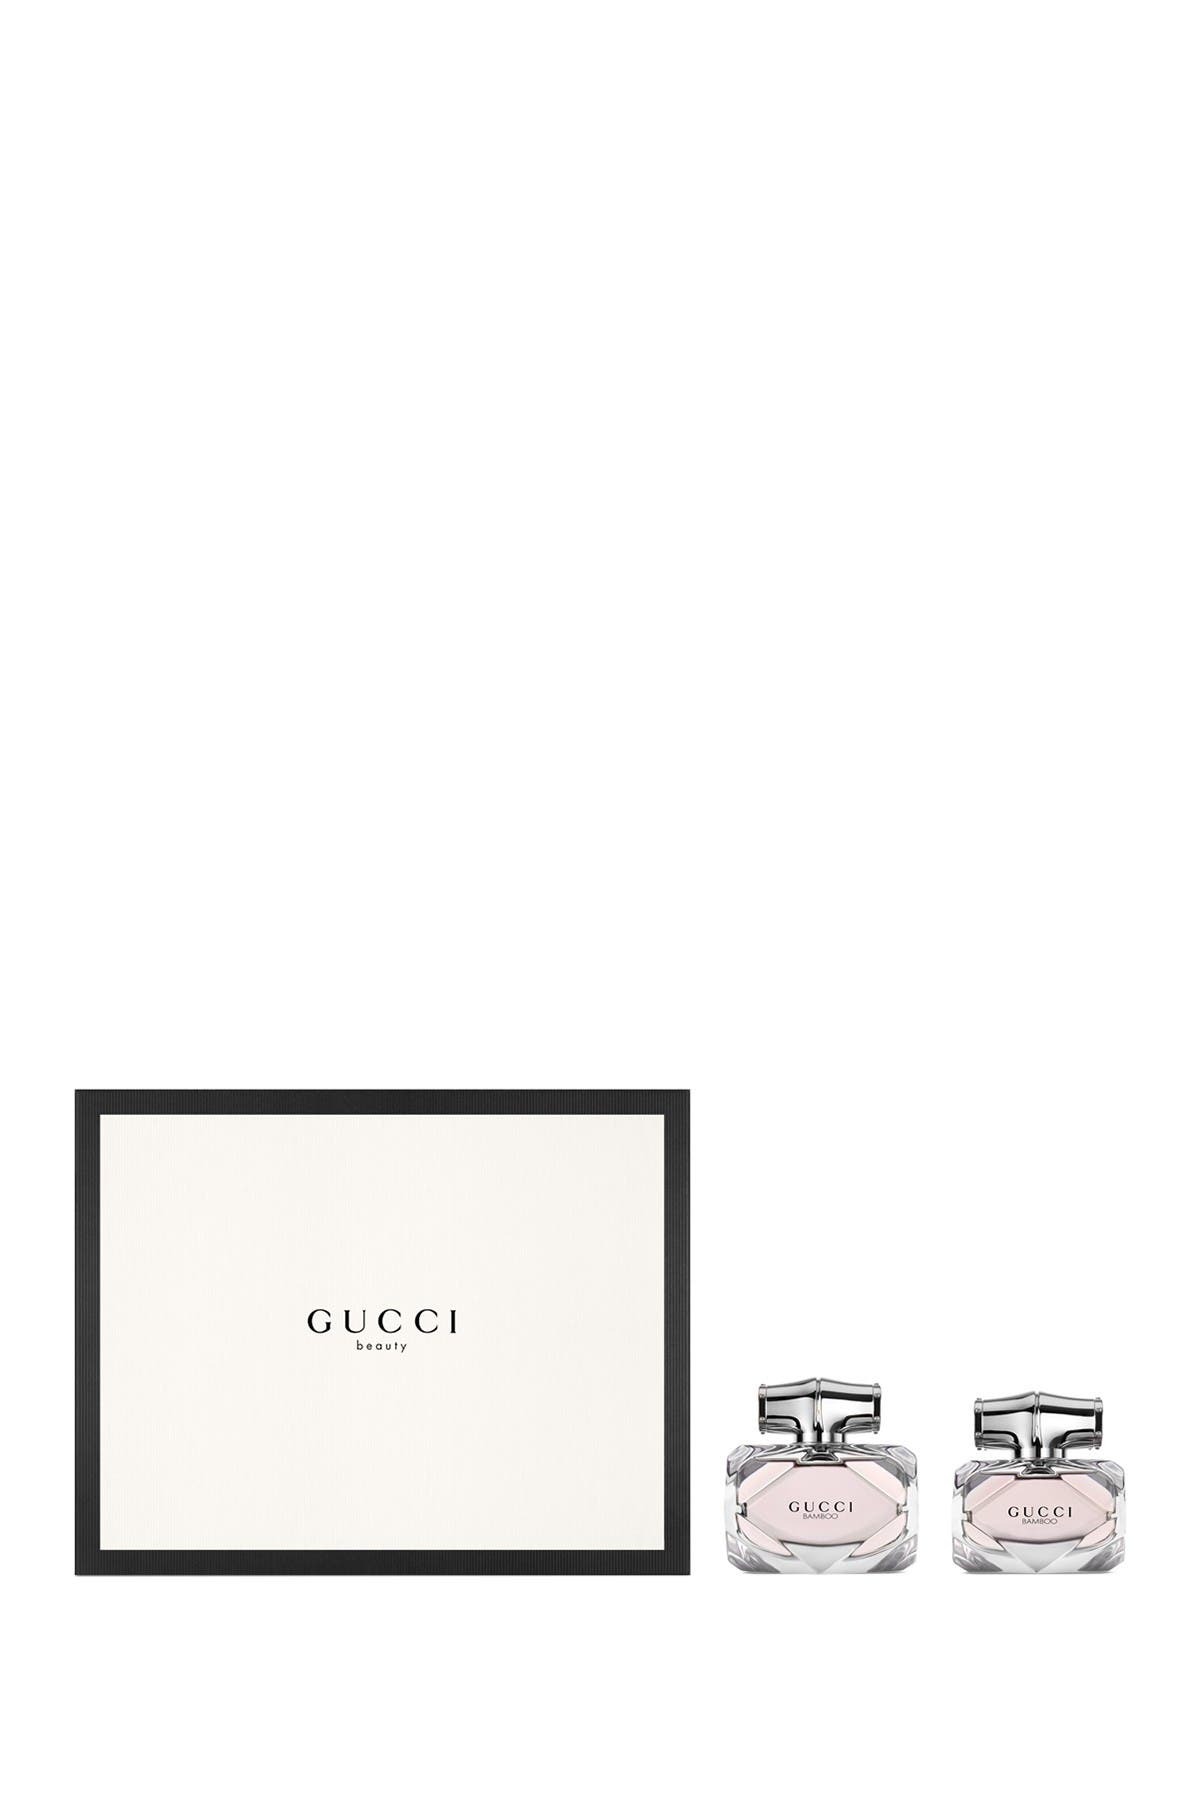 gucci bamboo perfume gift set